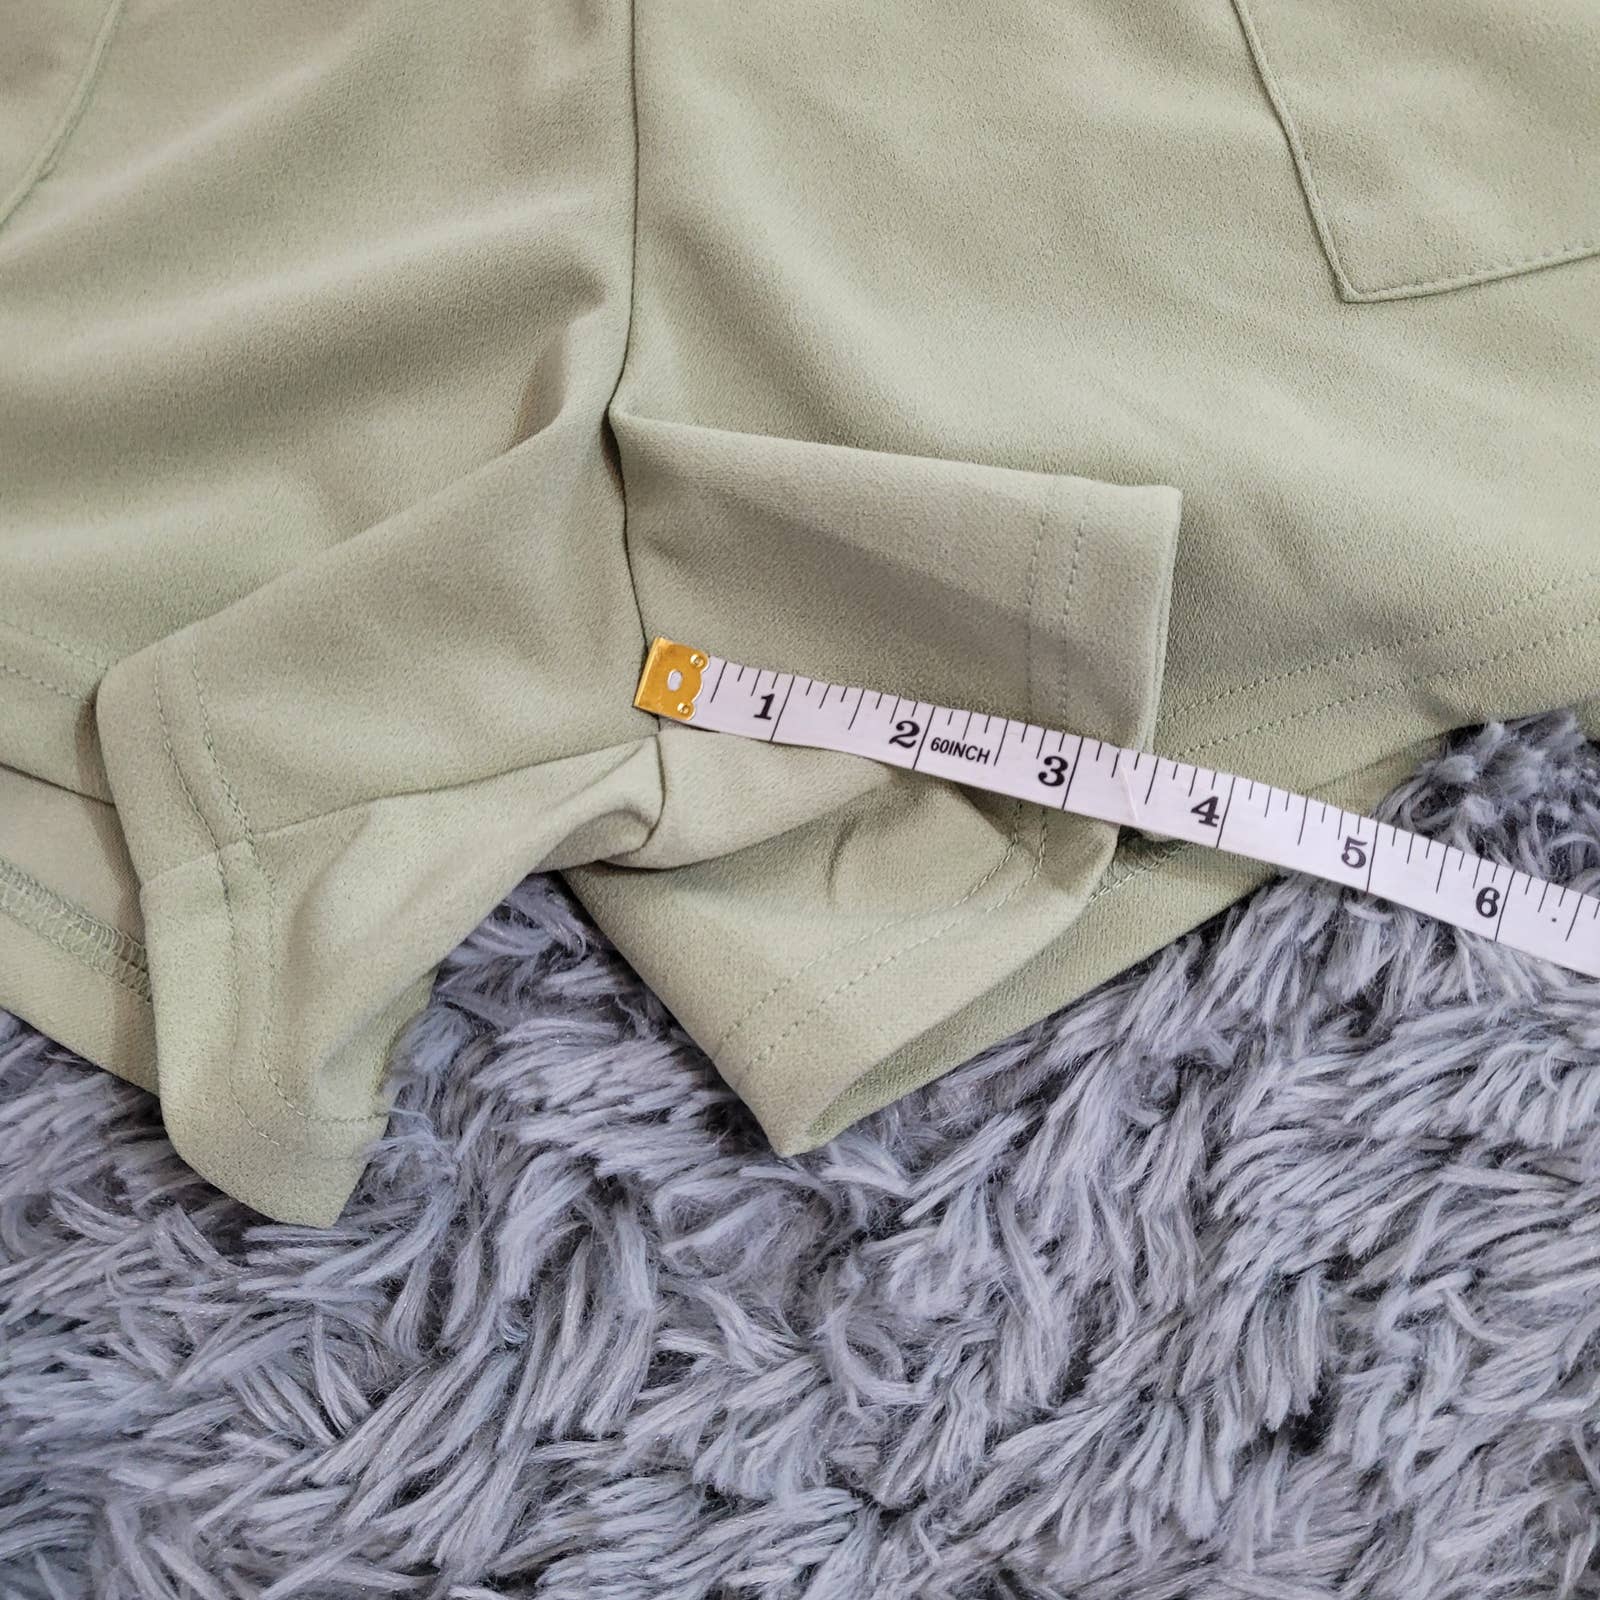 Forever 21 Green Shorts - Size LargeMarkita's ClosetFOREVER 21